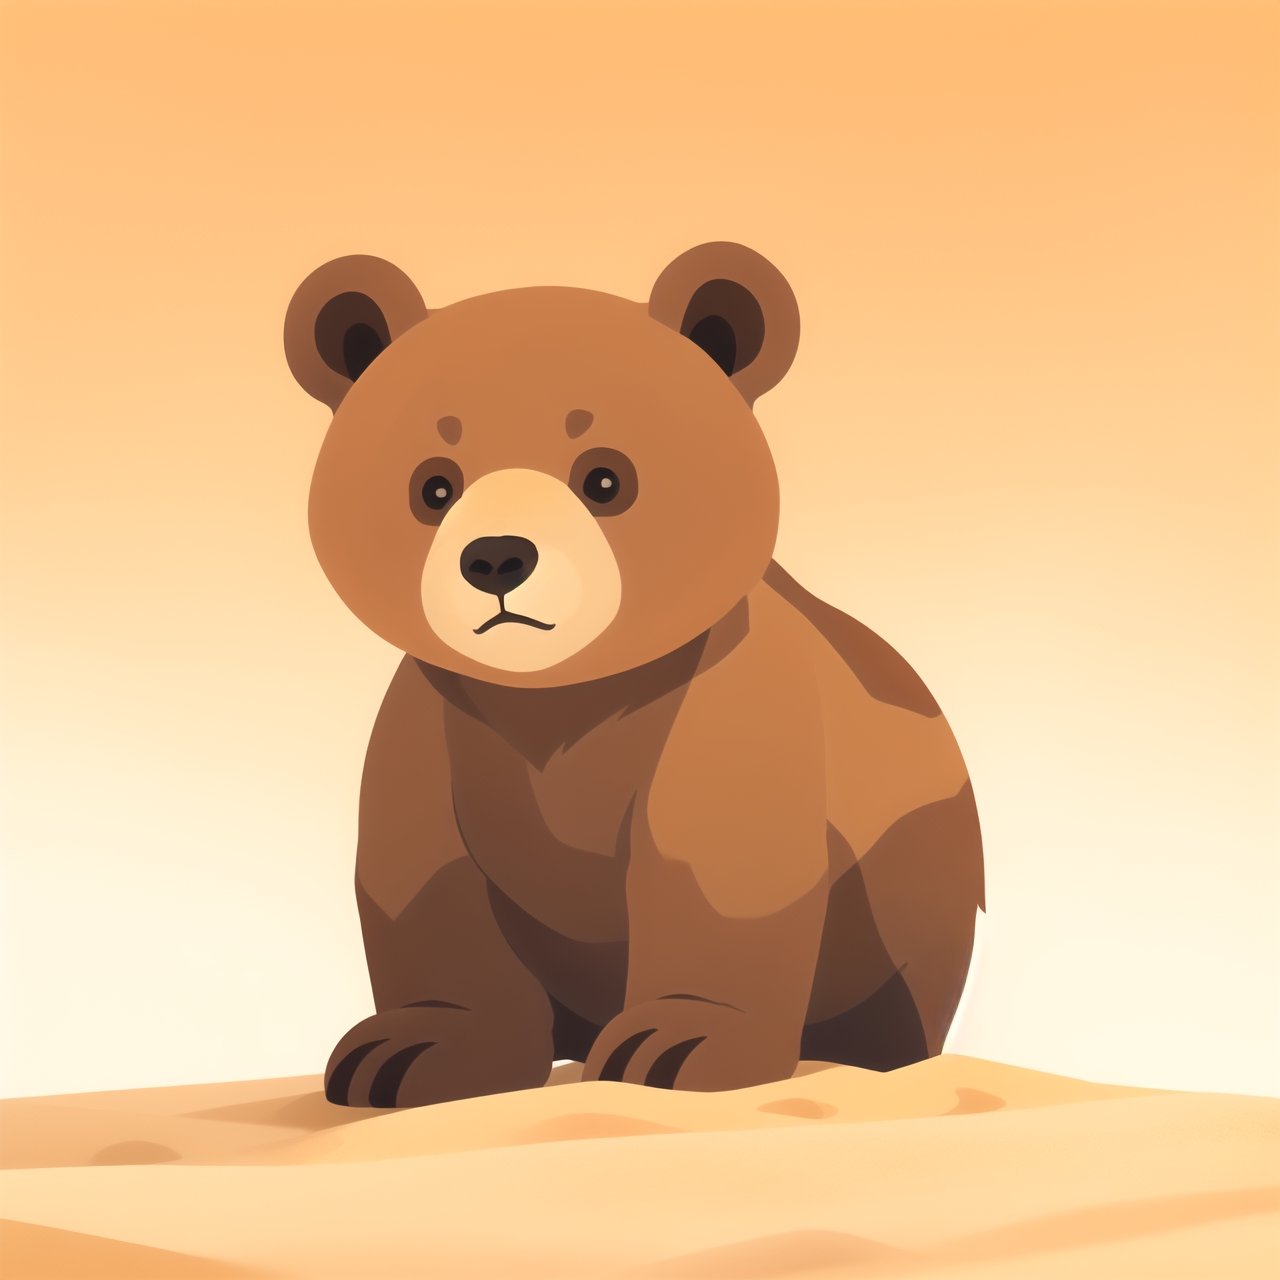 coloredic0n icon, a bear, light_orange_background, on sand